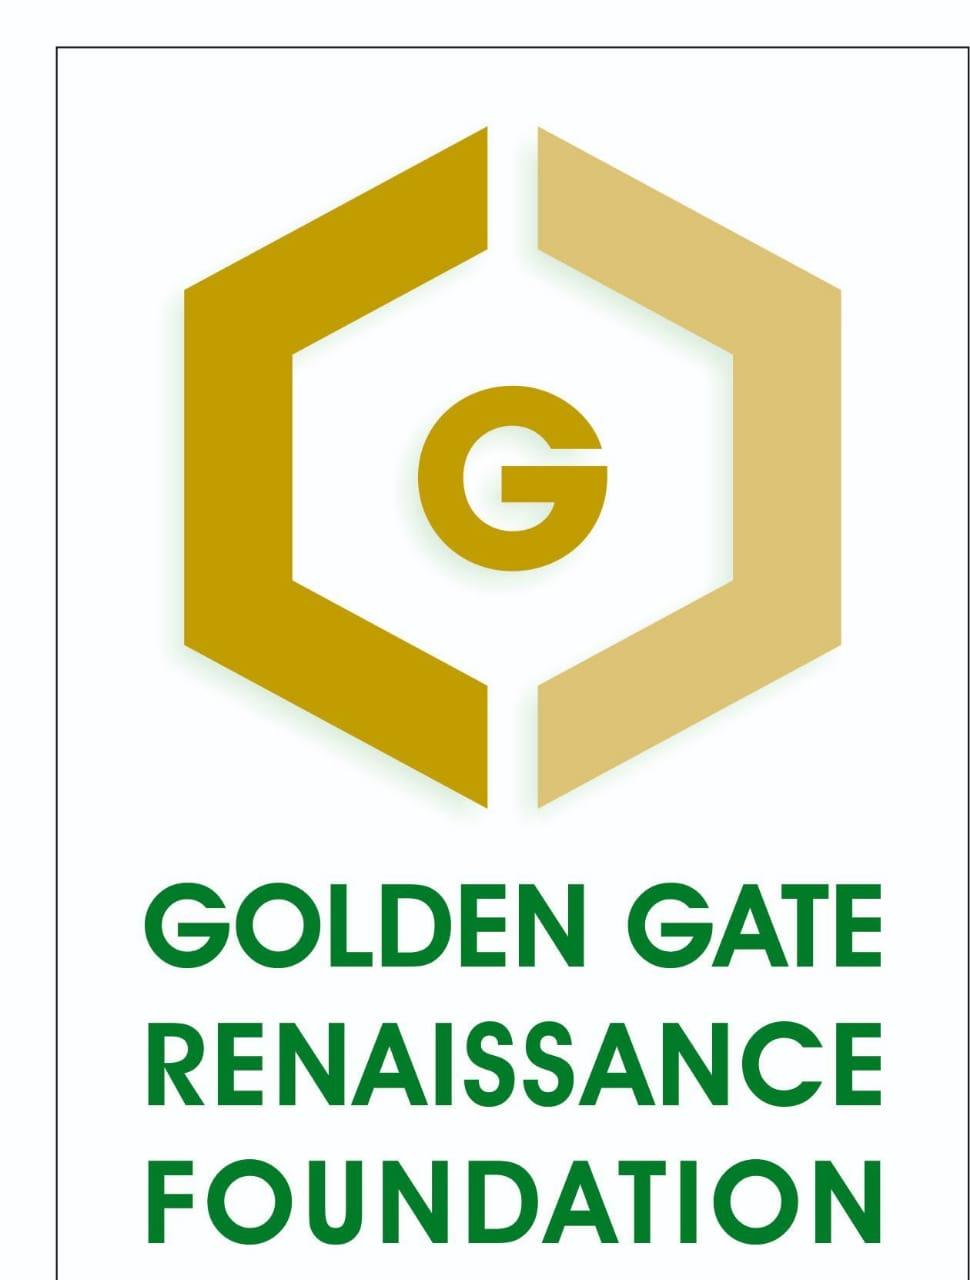 Golden Gate Renaissance Foundation logo